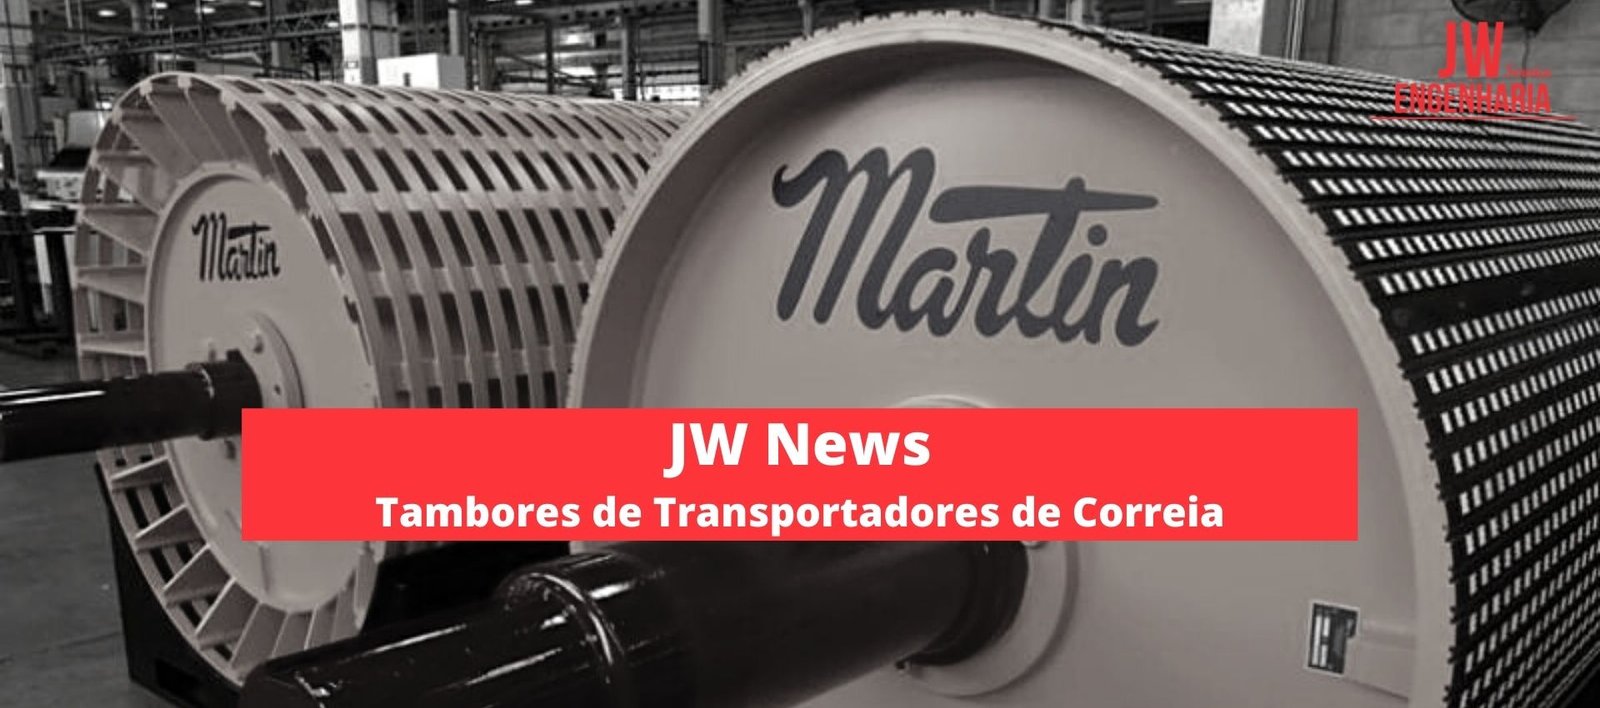 Tambores de Transportadores de Correia - JW News